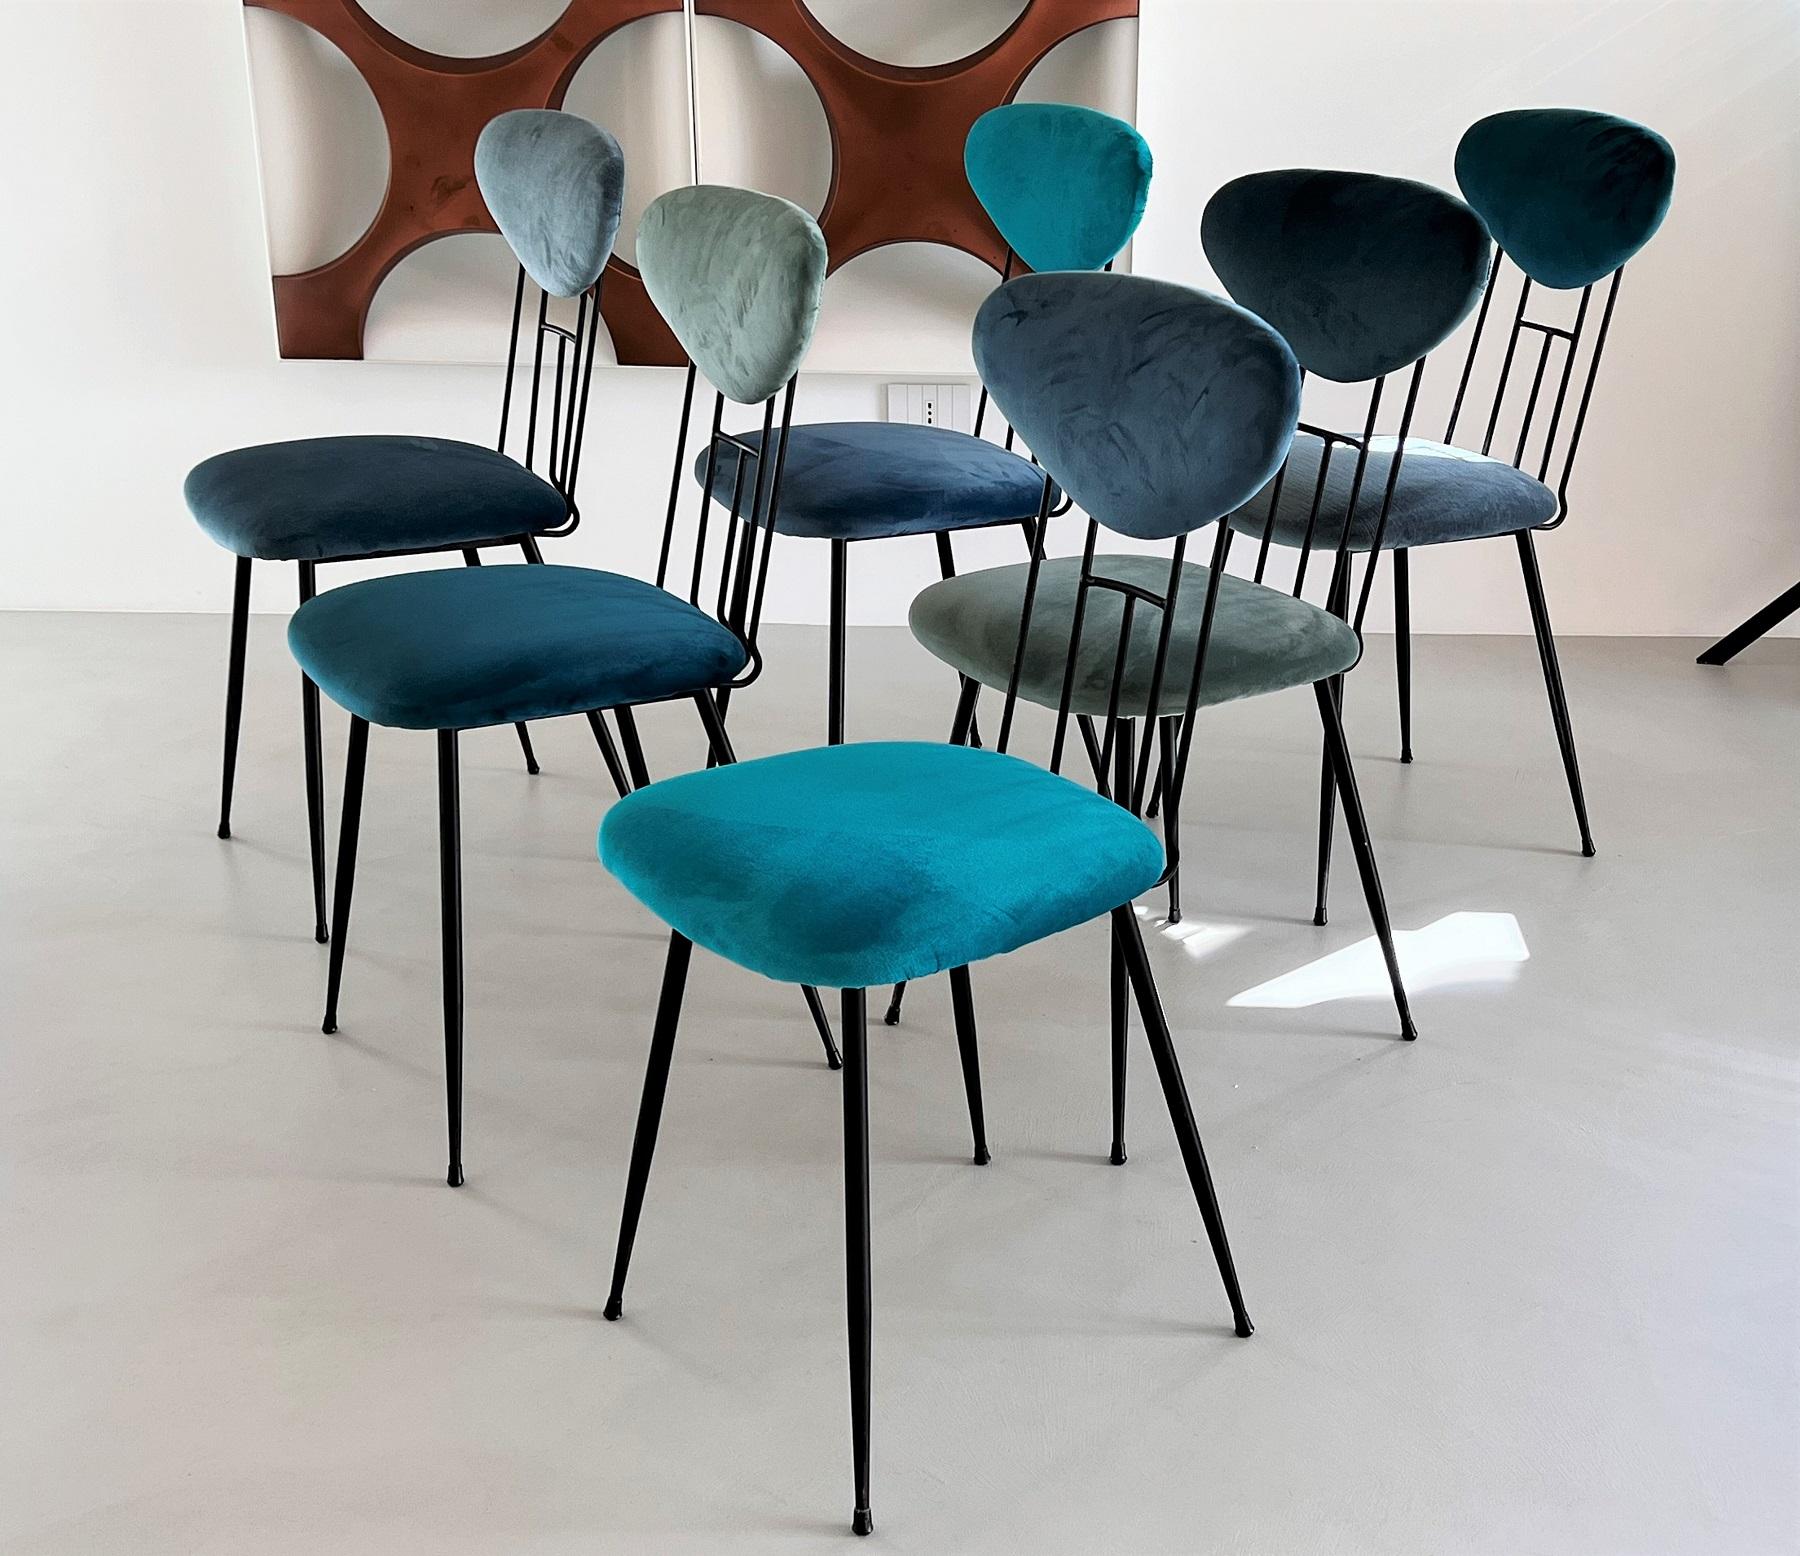 20th Century Italian Midcentury Dining Room Chairs Re-Upholstered in Velvet, 1960s For Sale